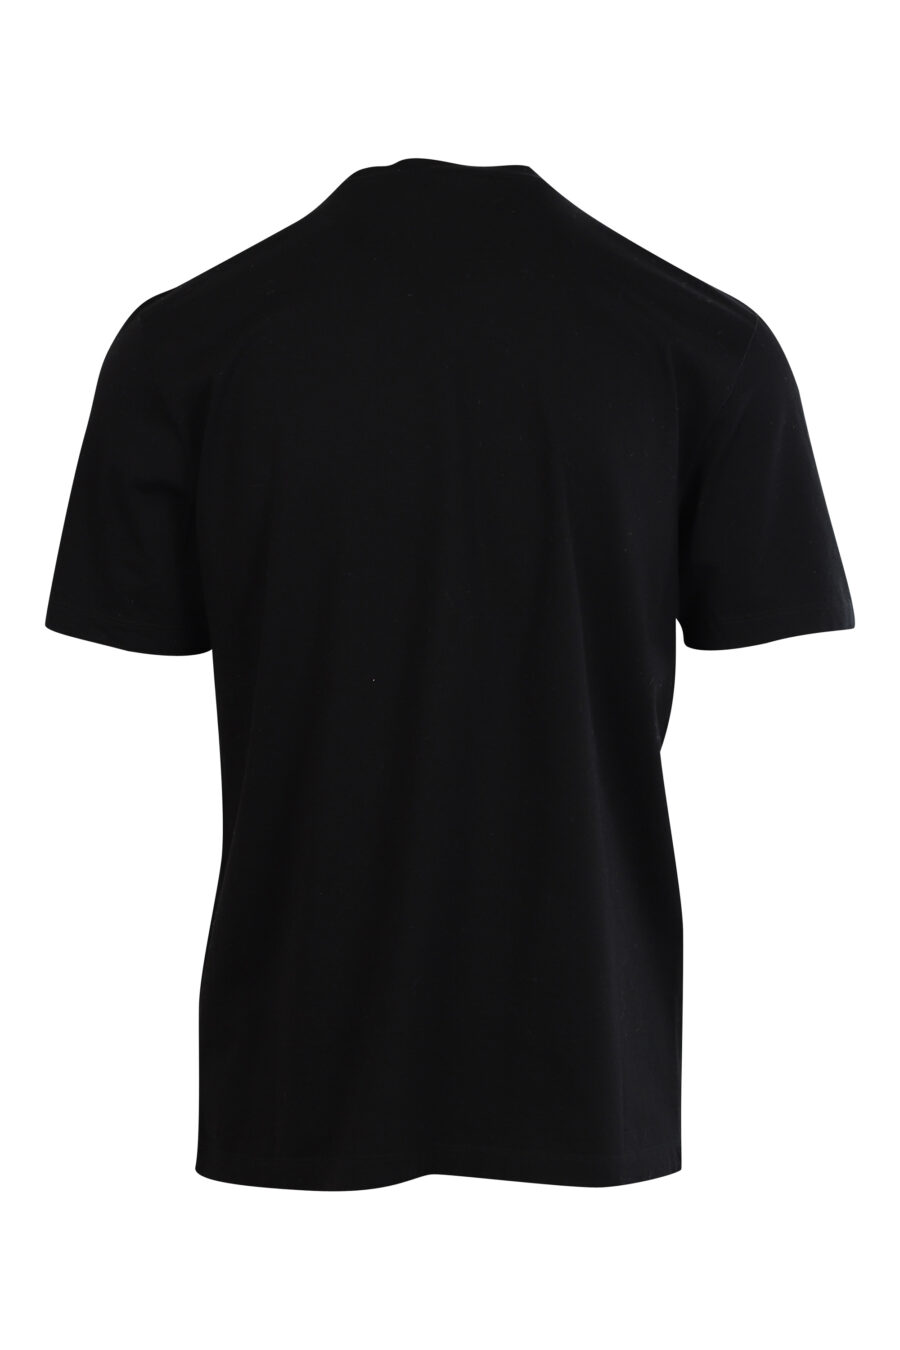 Camiseta negra con minilogo blanco "bold" y hoja naranja - 8052134990216 2